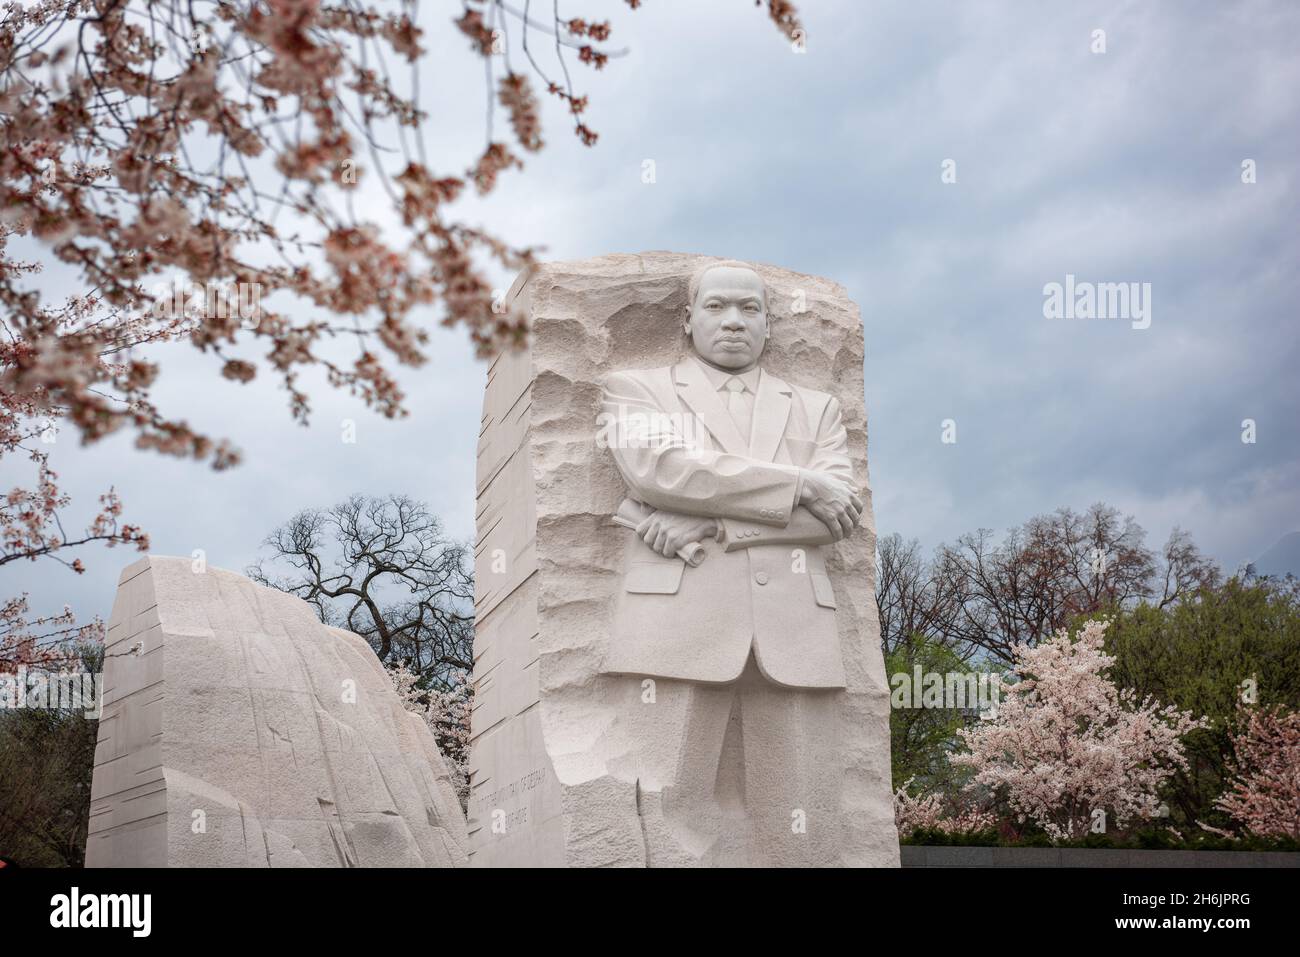 Washington - 12. APRIL 2015: Das Denkmal für den Bürgerrechtsführer Martin Luther King, Jr. während der Frühjahrssaison im West Potomac Park. Stockfoto